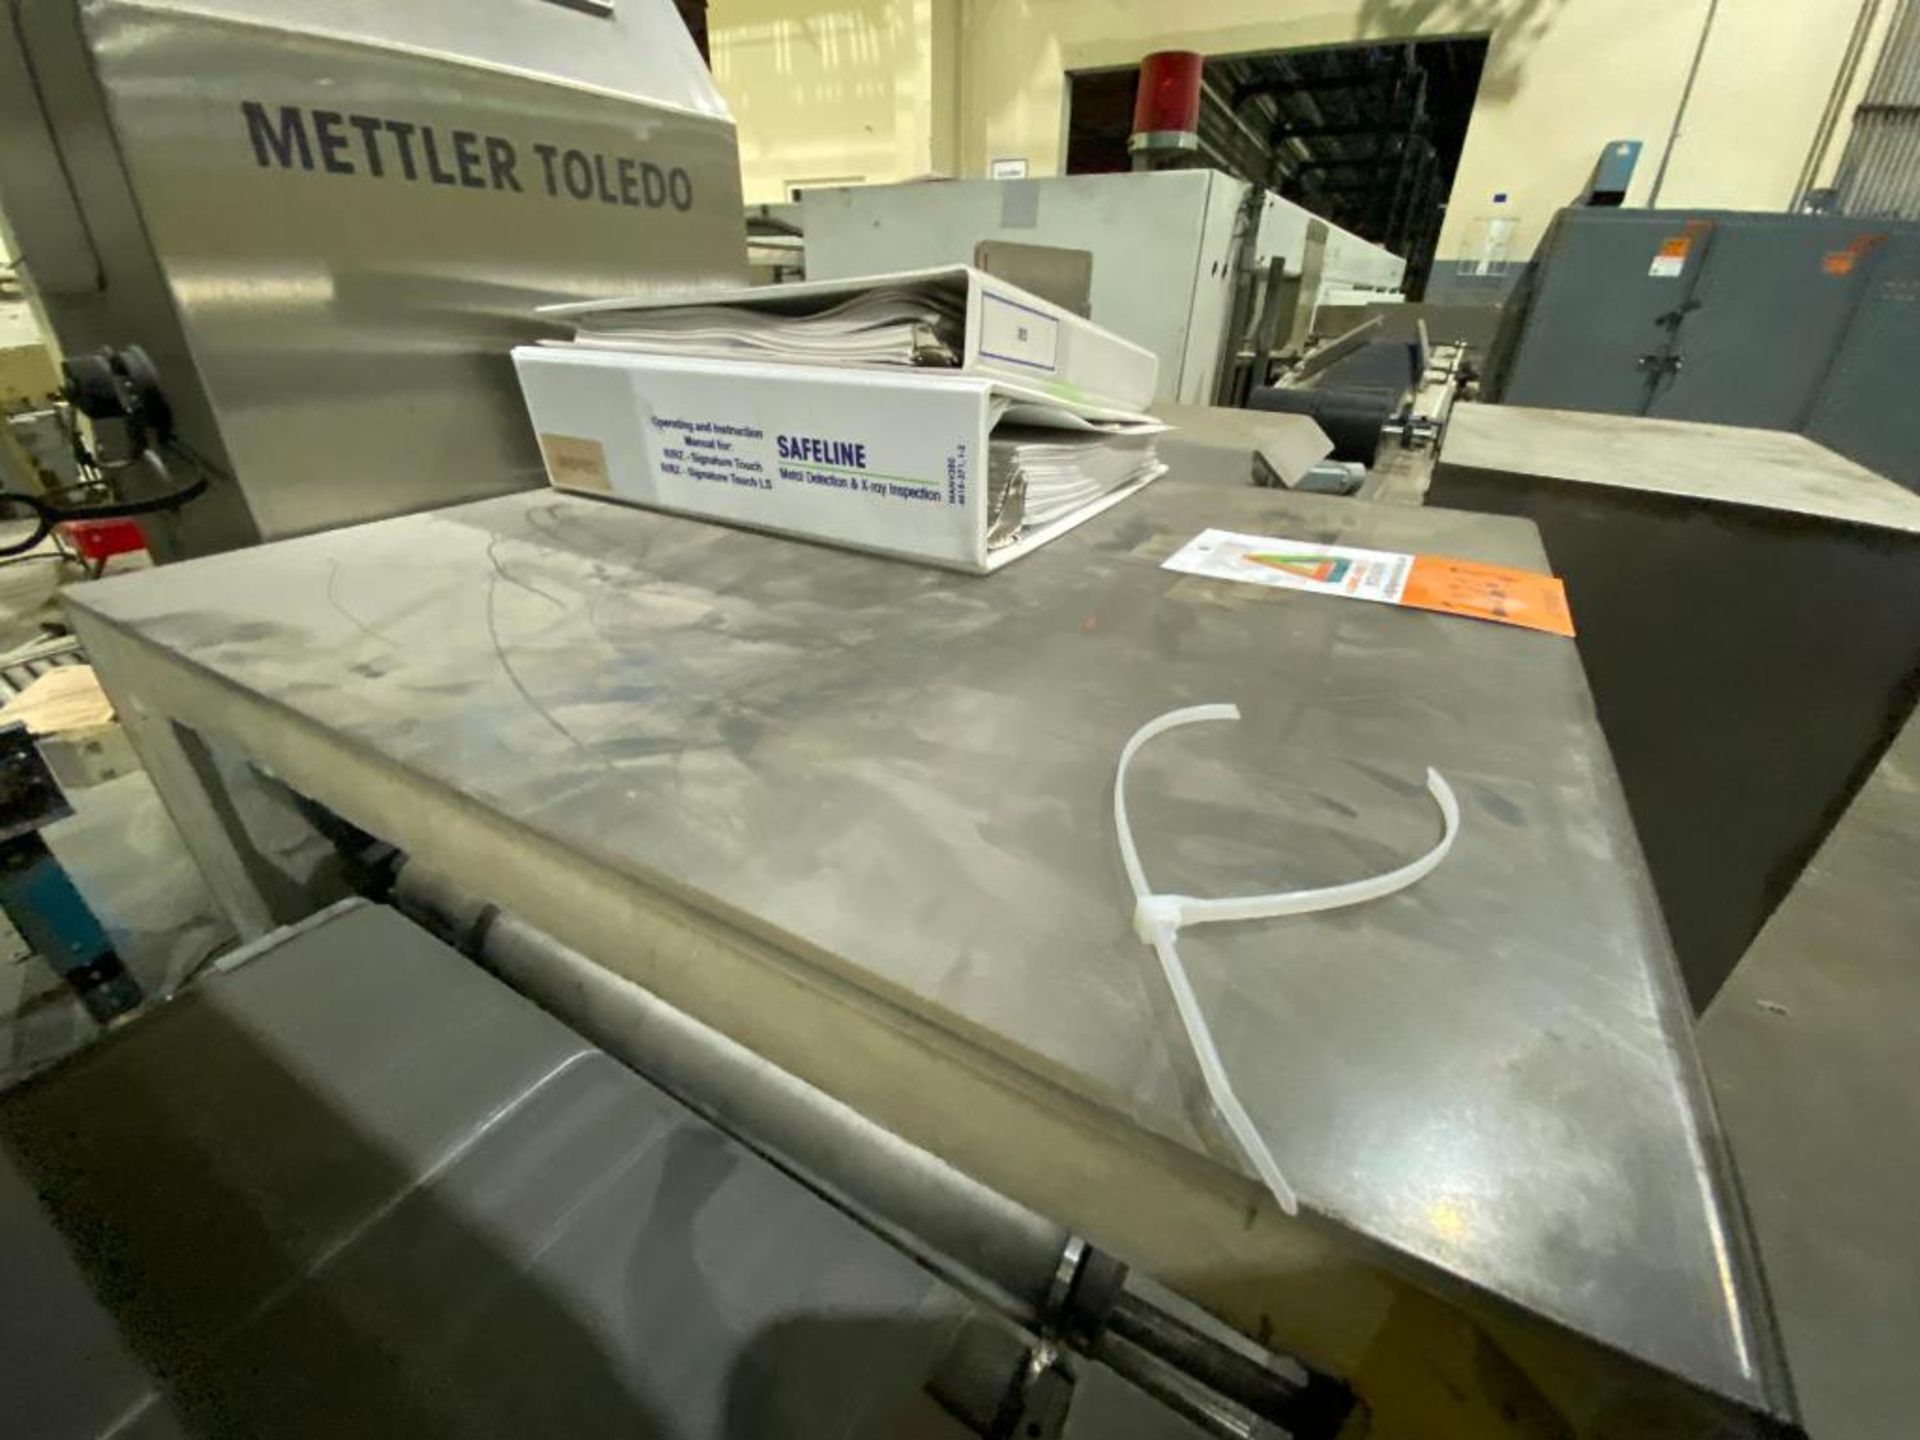 Mettler Toledo metal detector and high speed check weigher